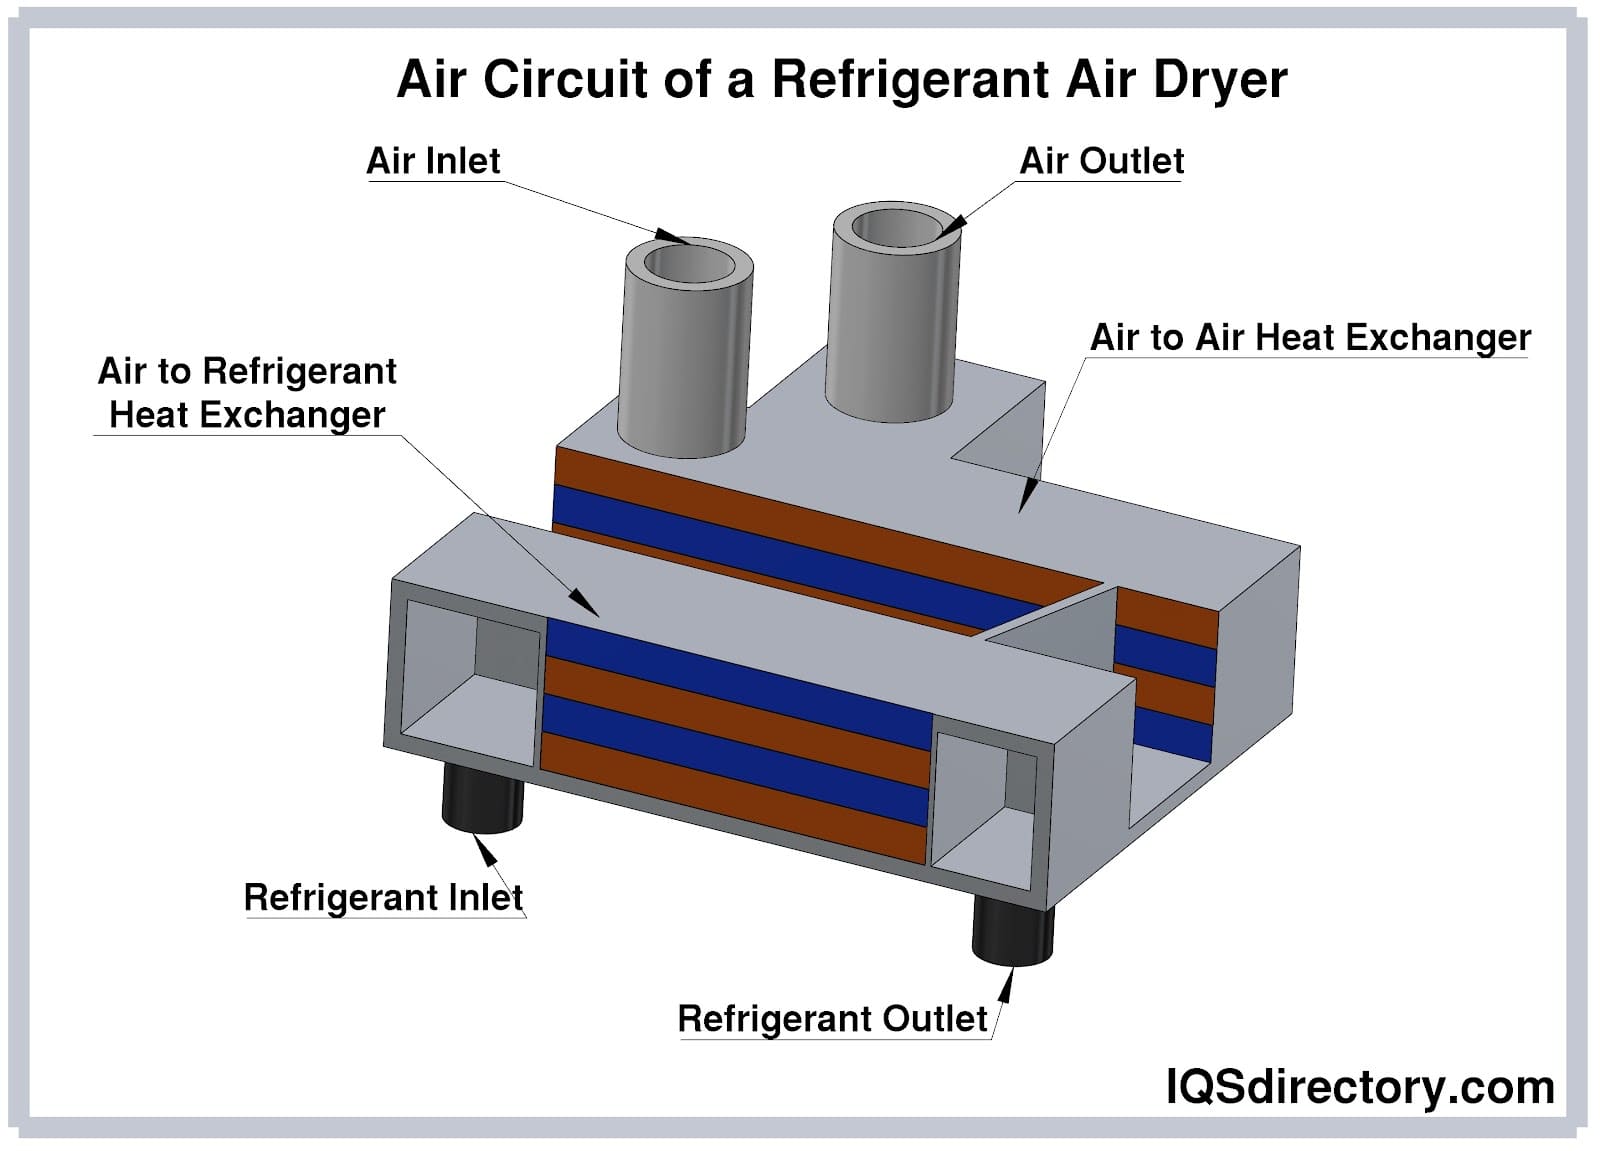 Air Circuit of a Refrigerant Air Dryer